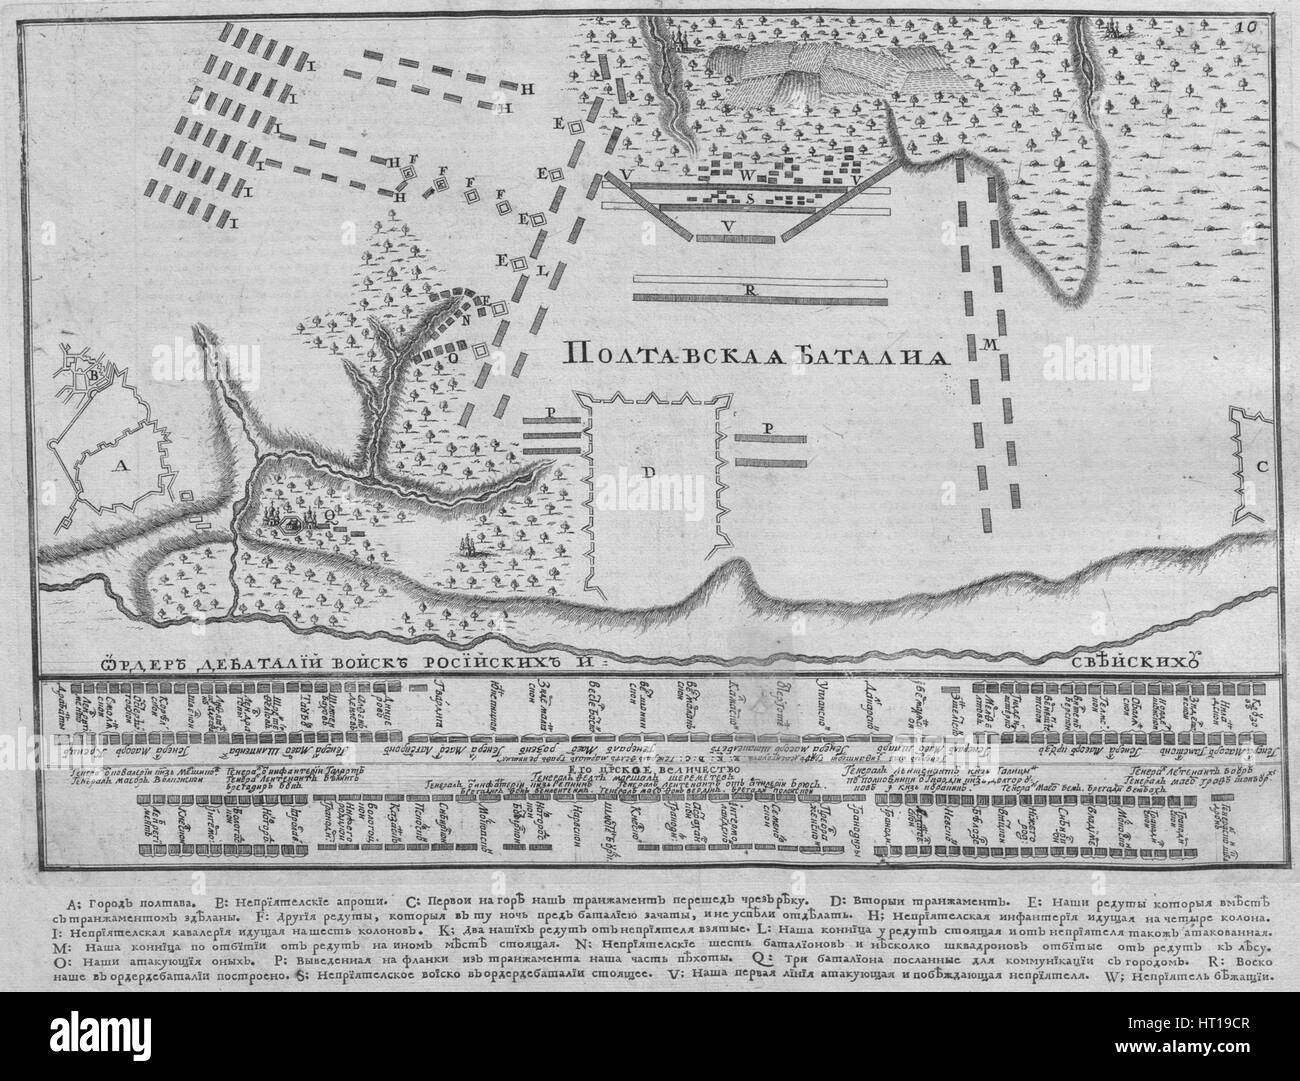 RCIN 726029 - Map of the Battle of Poltava, 1709 (Poltava